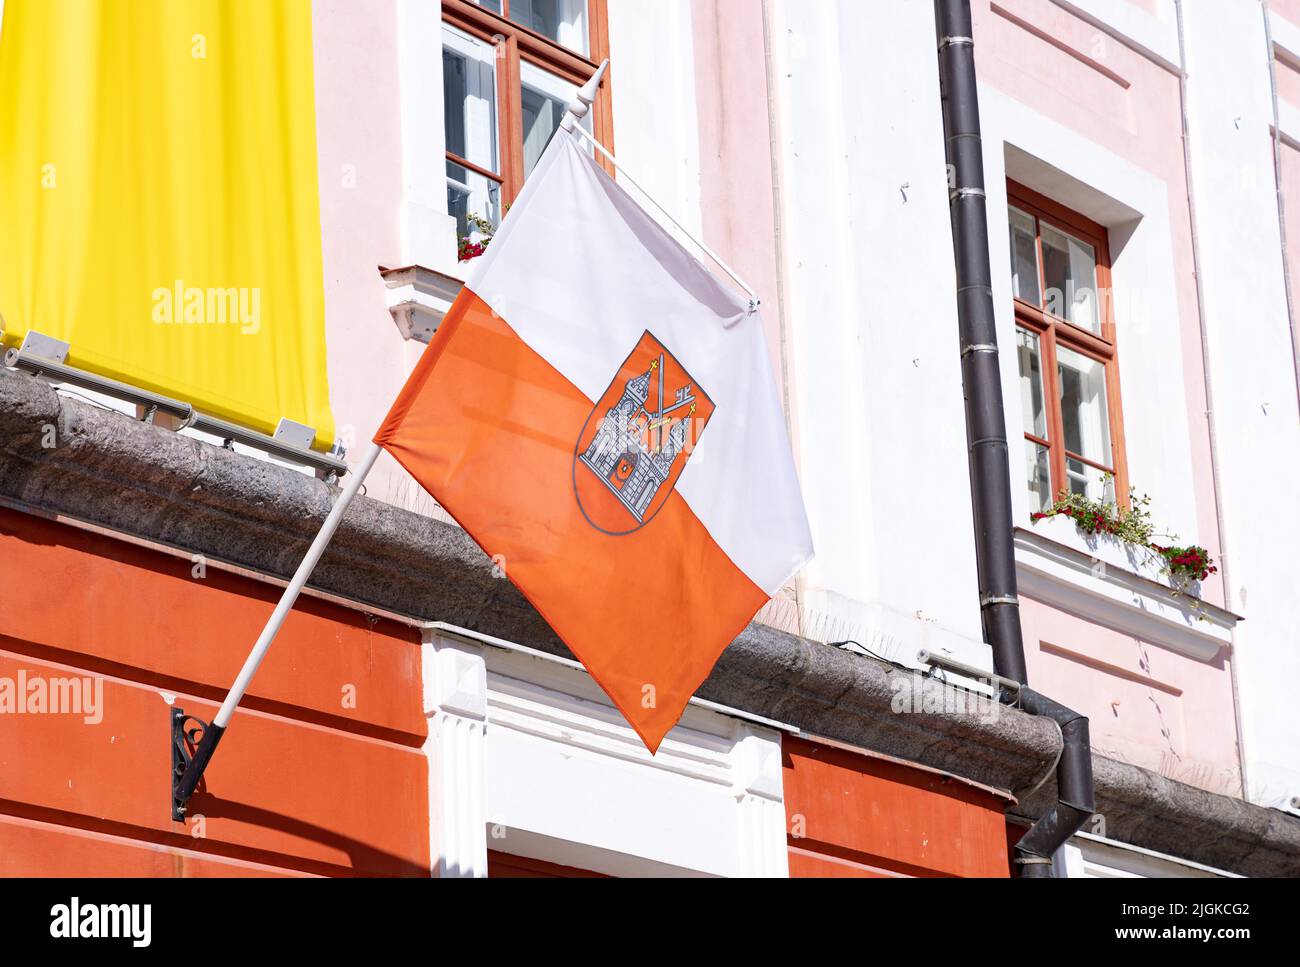 La bandera de Tartu; la bandera de la ciudad de Tartu volando, Tartu, Estonia Europa Foto de stock